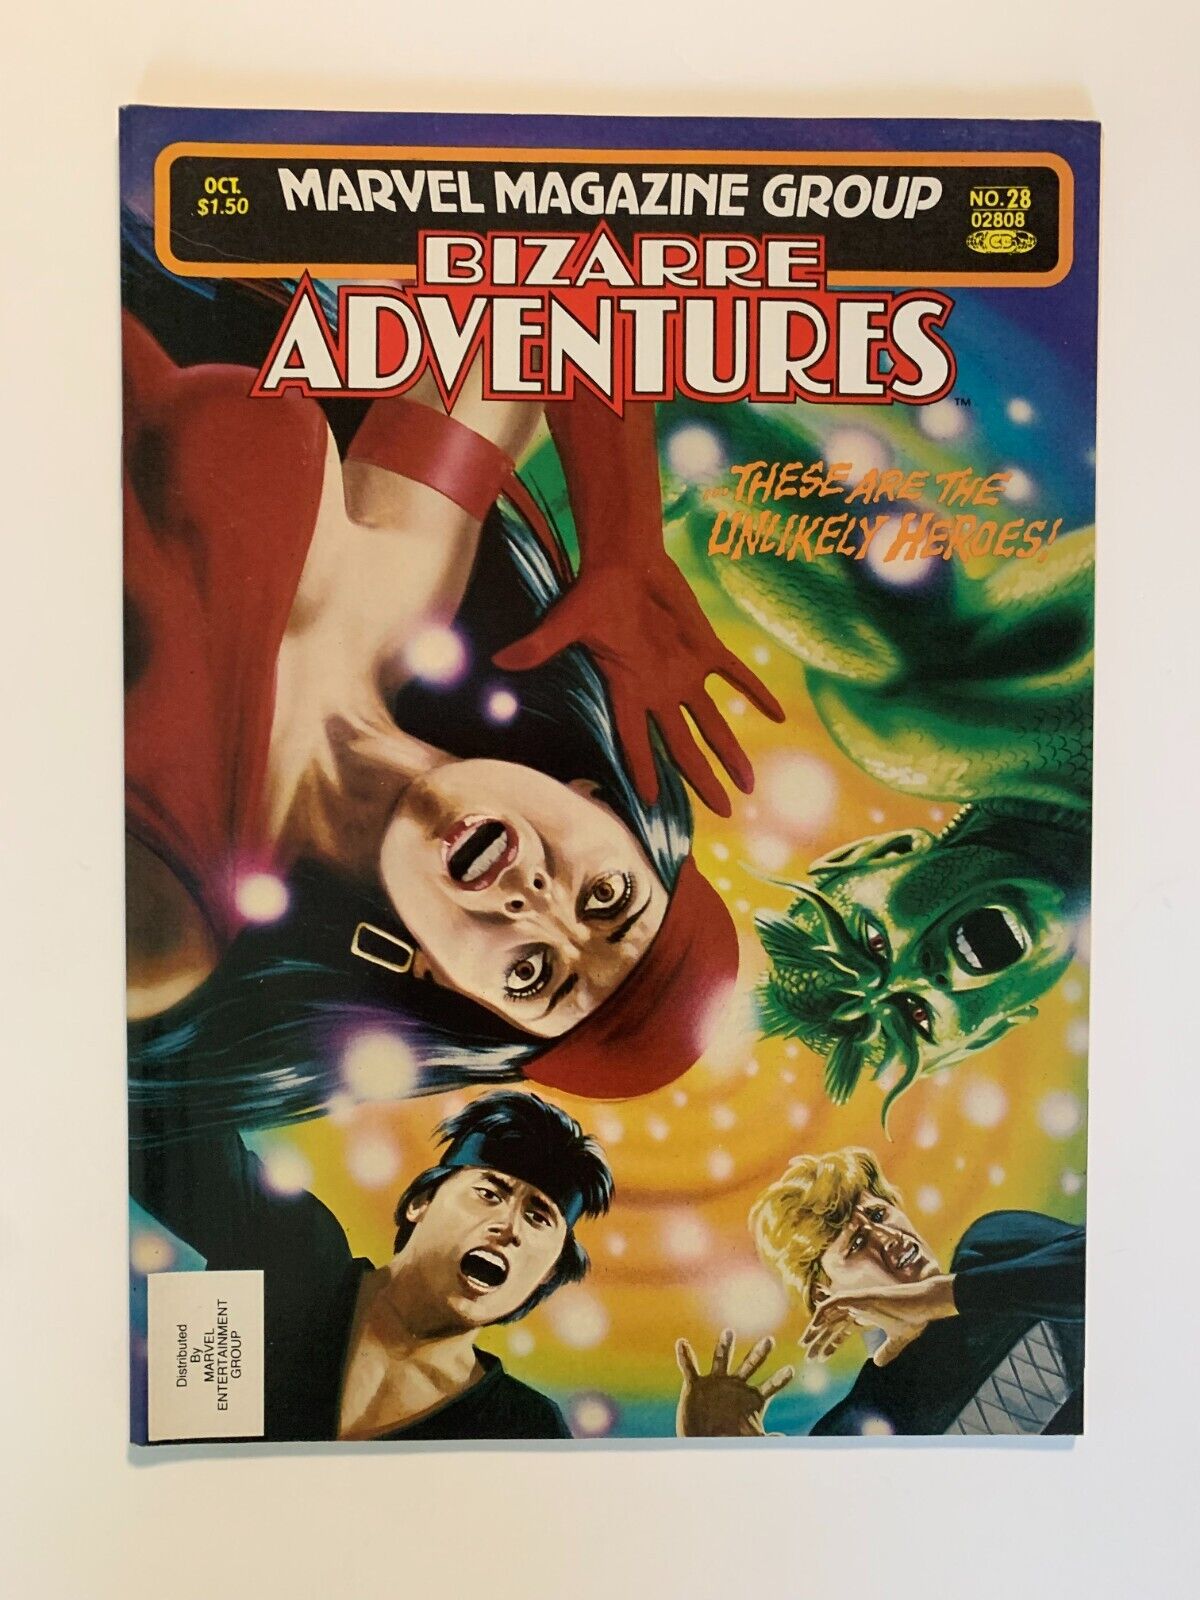 Bizarre Adventures Magazine #28 - Oct 1981 - Marvel Magazine - 8.0 VF